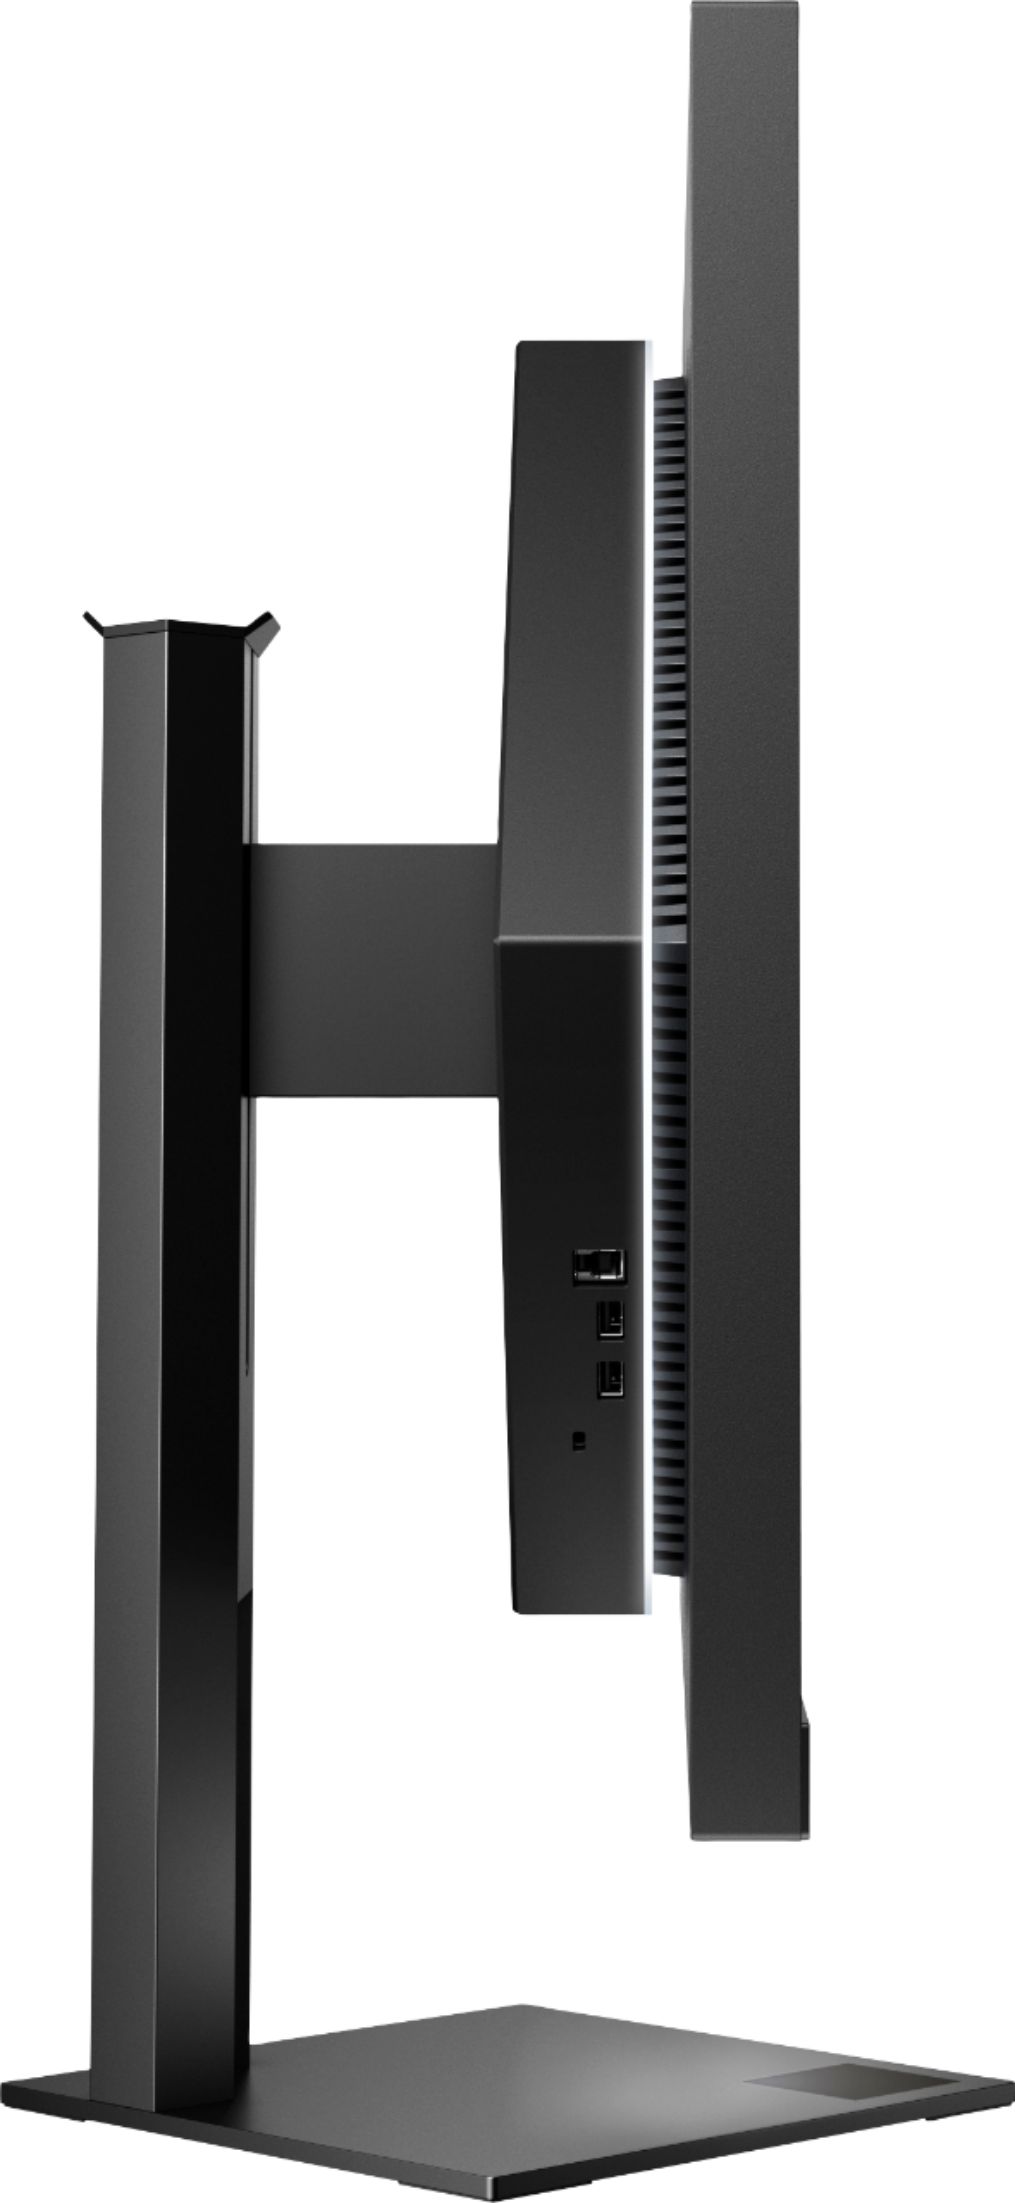 HP OMEN 27 IPS LED QHD FreeSync & G-Sync Compatible Gaming Monitor  (DisplayPort, HDMI, USB) Shadow Black OMEN 27i - Best Buy